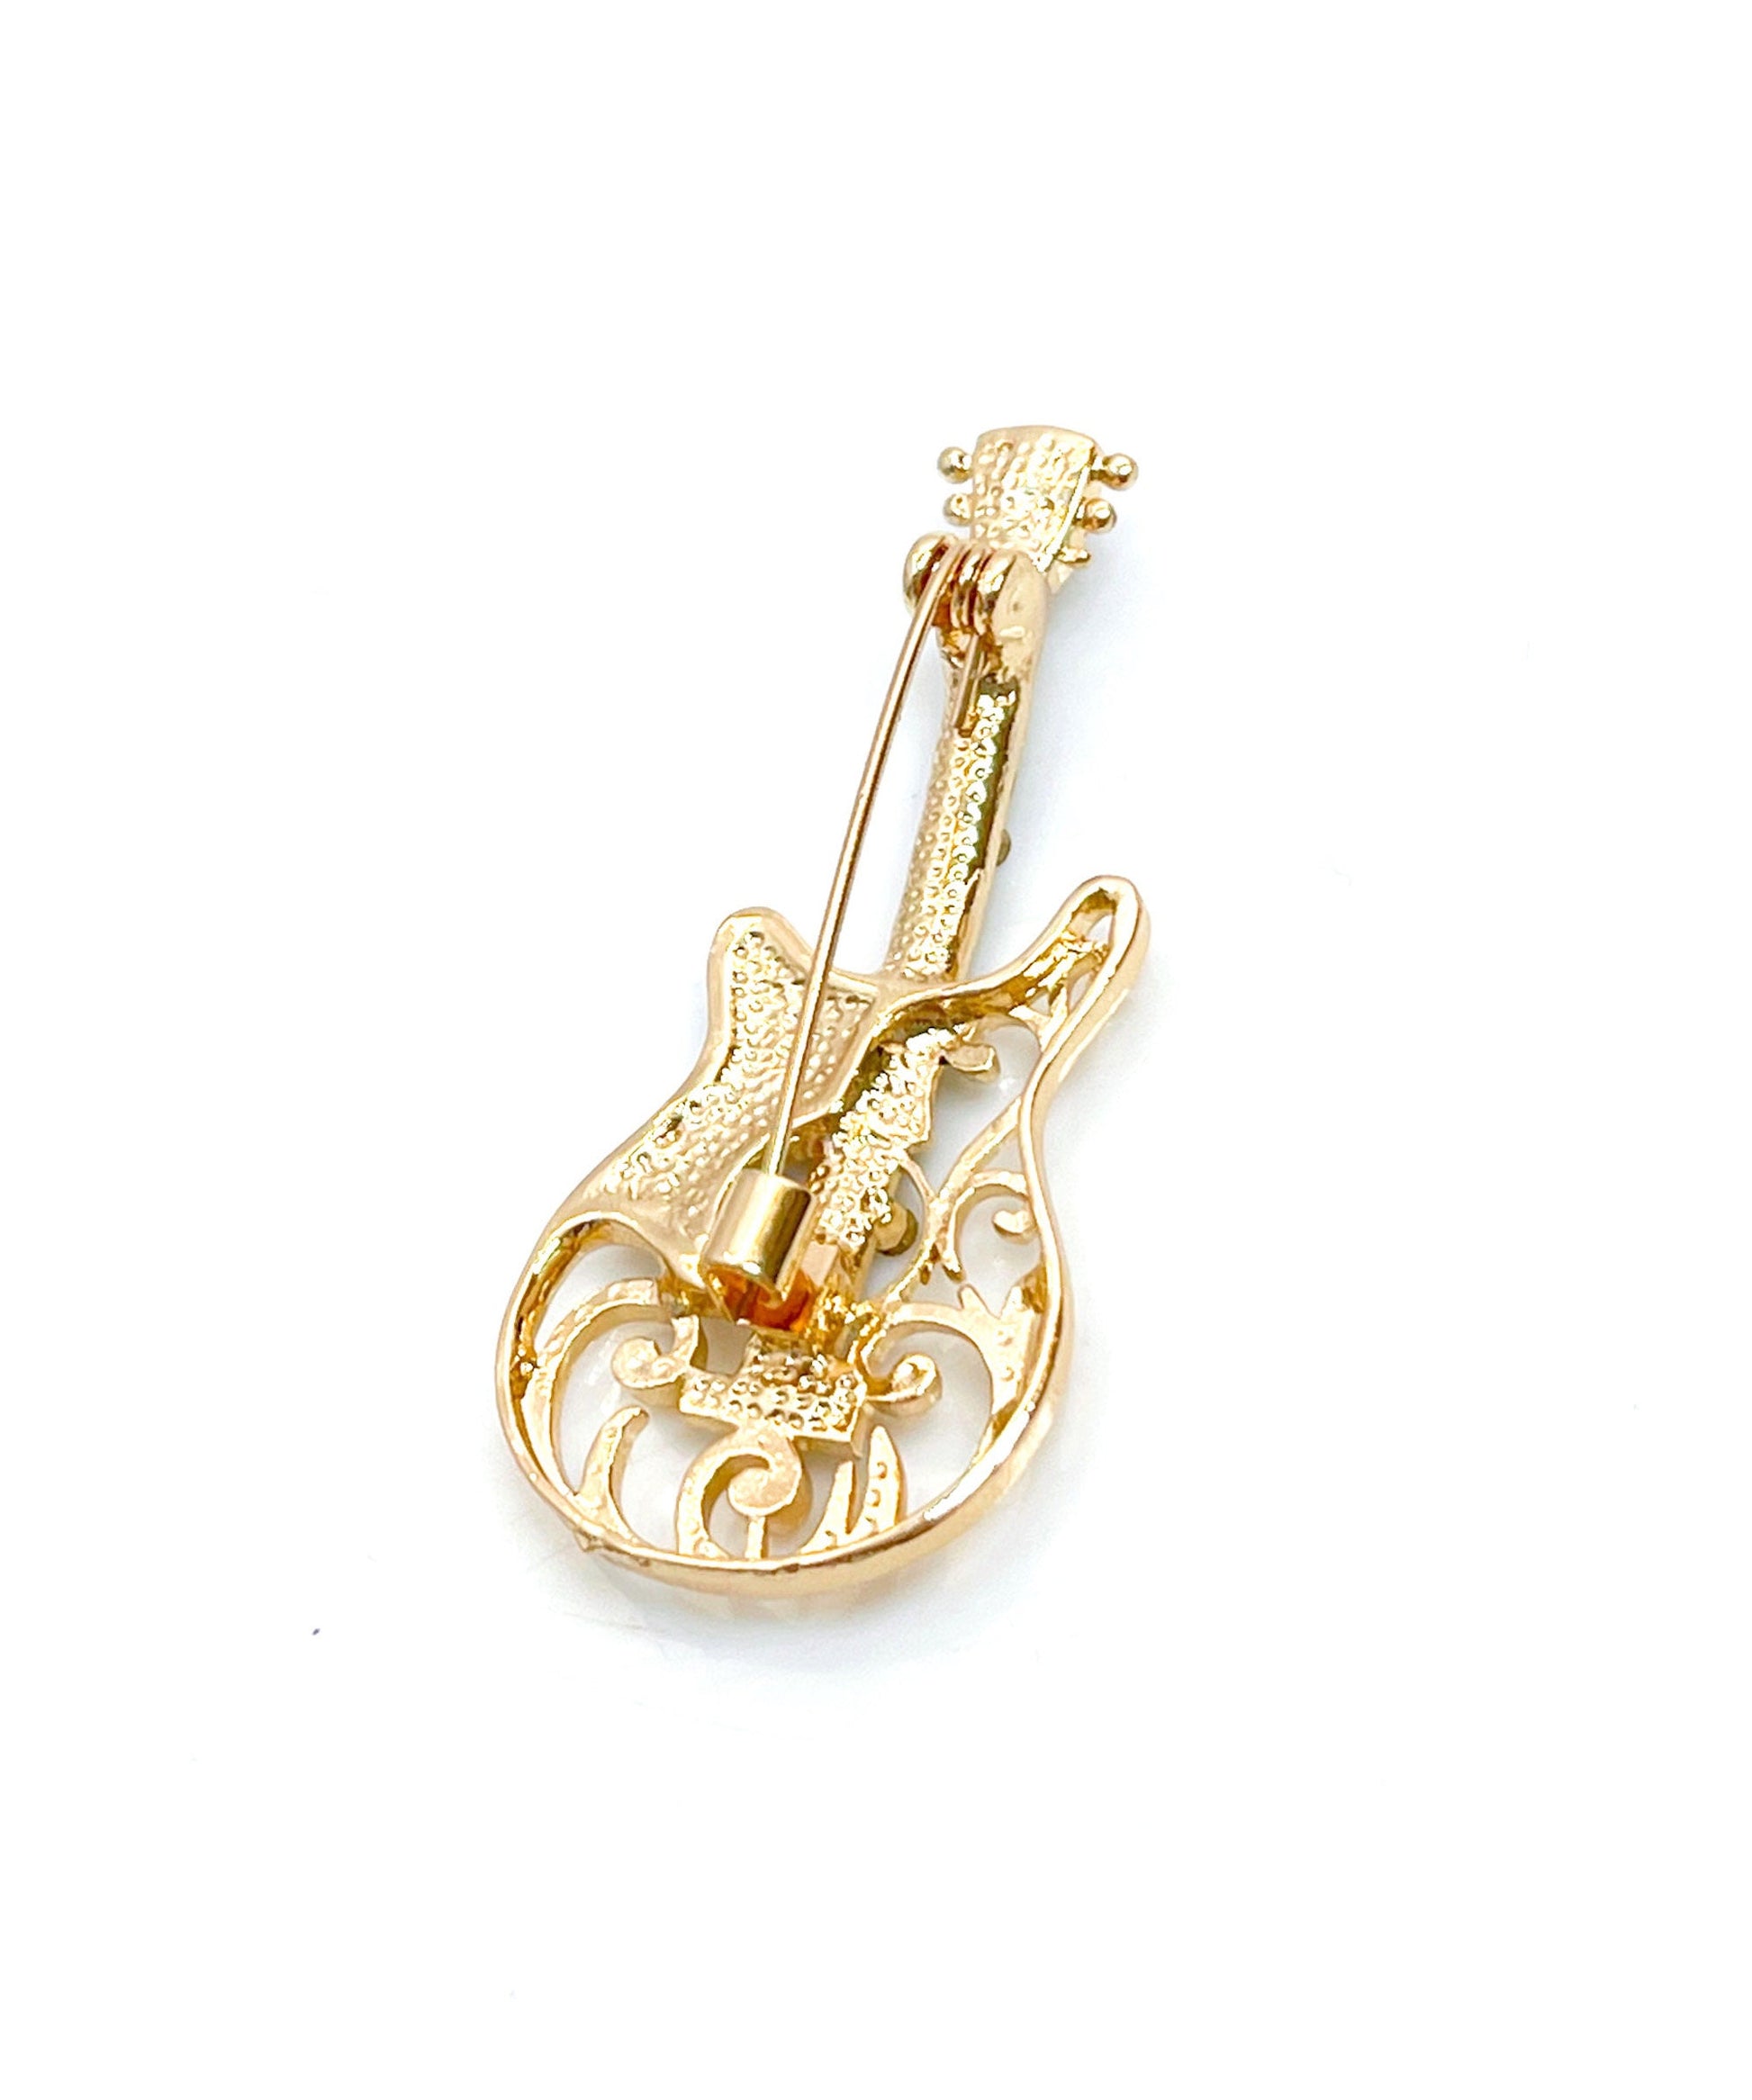 Gold Crystal Guitar Brooch, Filigree Fashion Brooch, Unisex Jewellery, Music Lovers Brooch, Rockers Pin, Guitar Lovers Gift